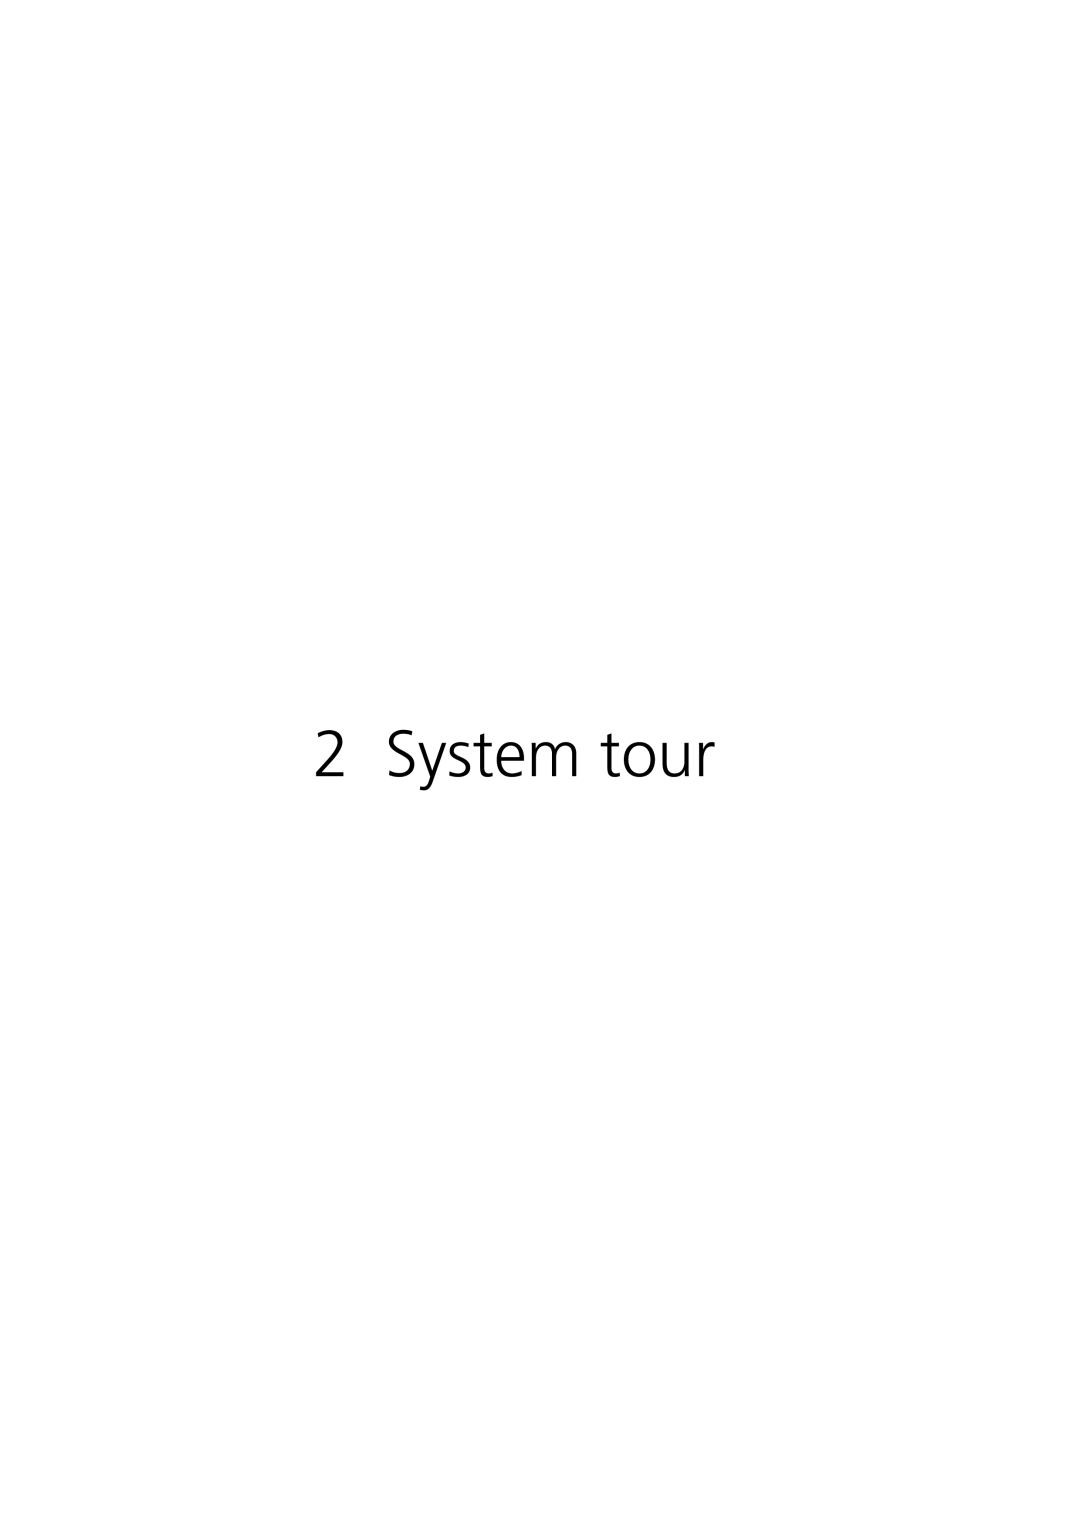 Acer 7600 manual System tour 